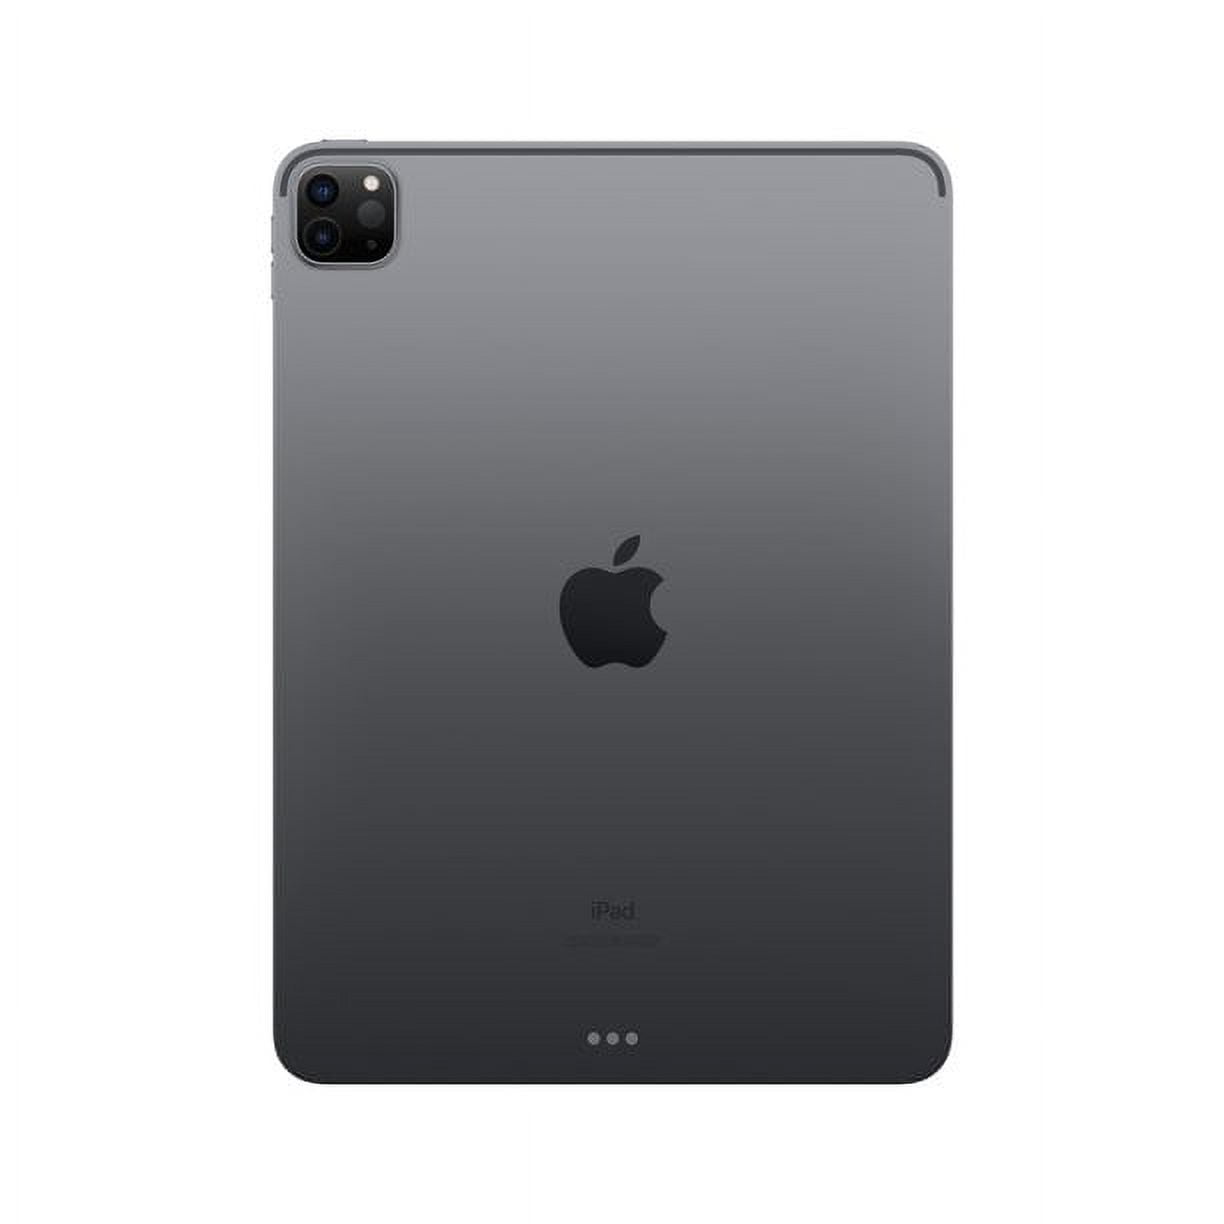 Refurbished 11-inch iPad Pro Wi-Fi 128GB - Silver (2nd Generation) - Apple